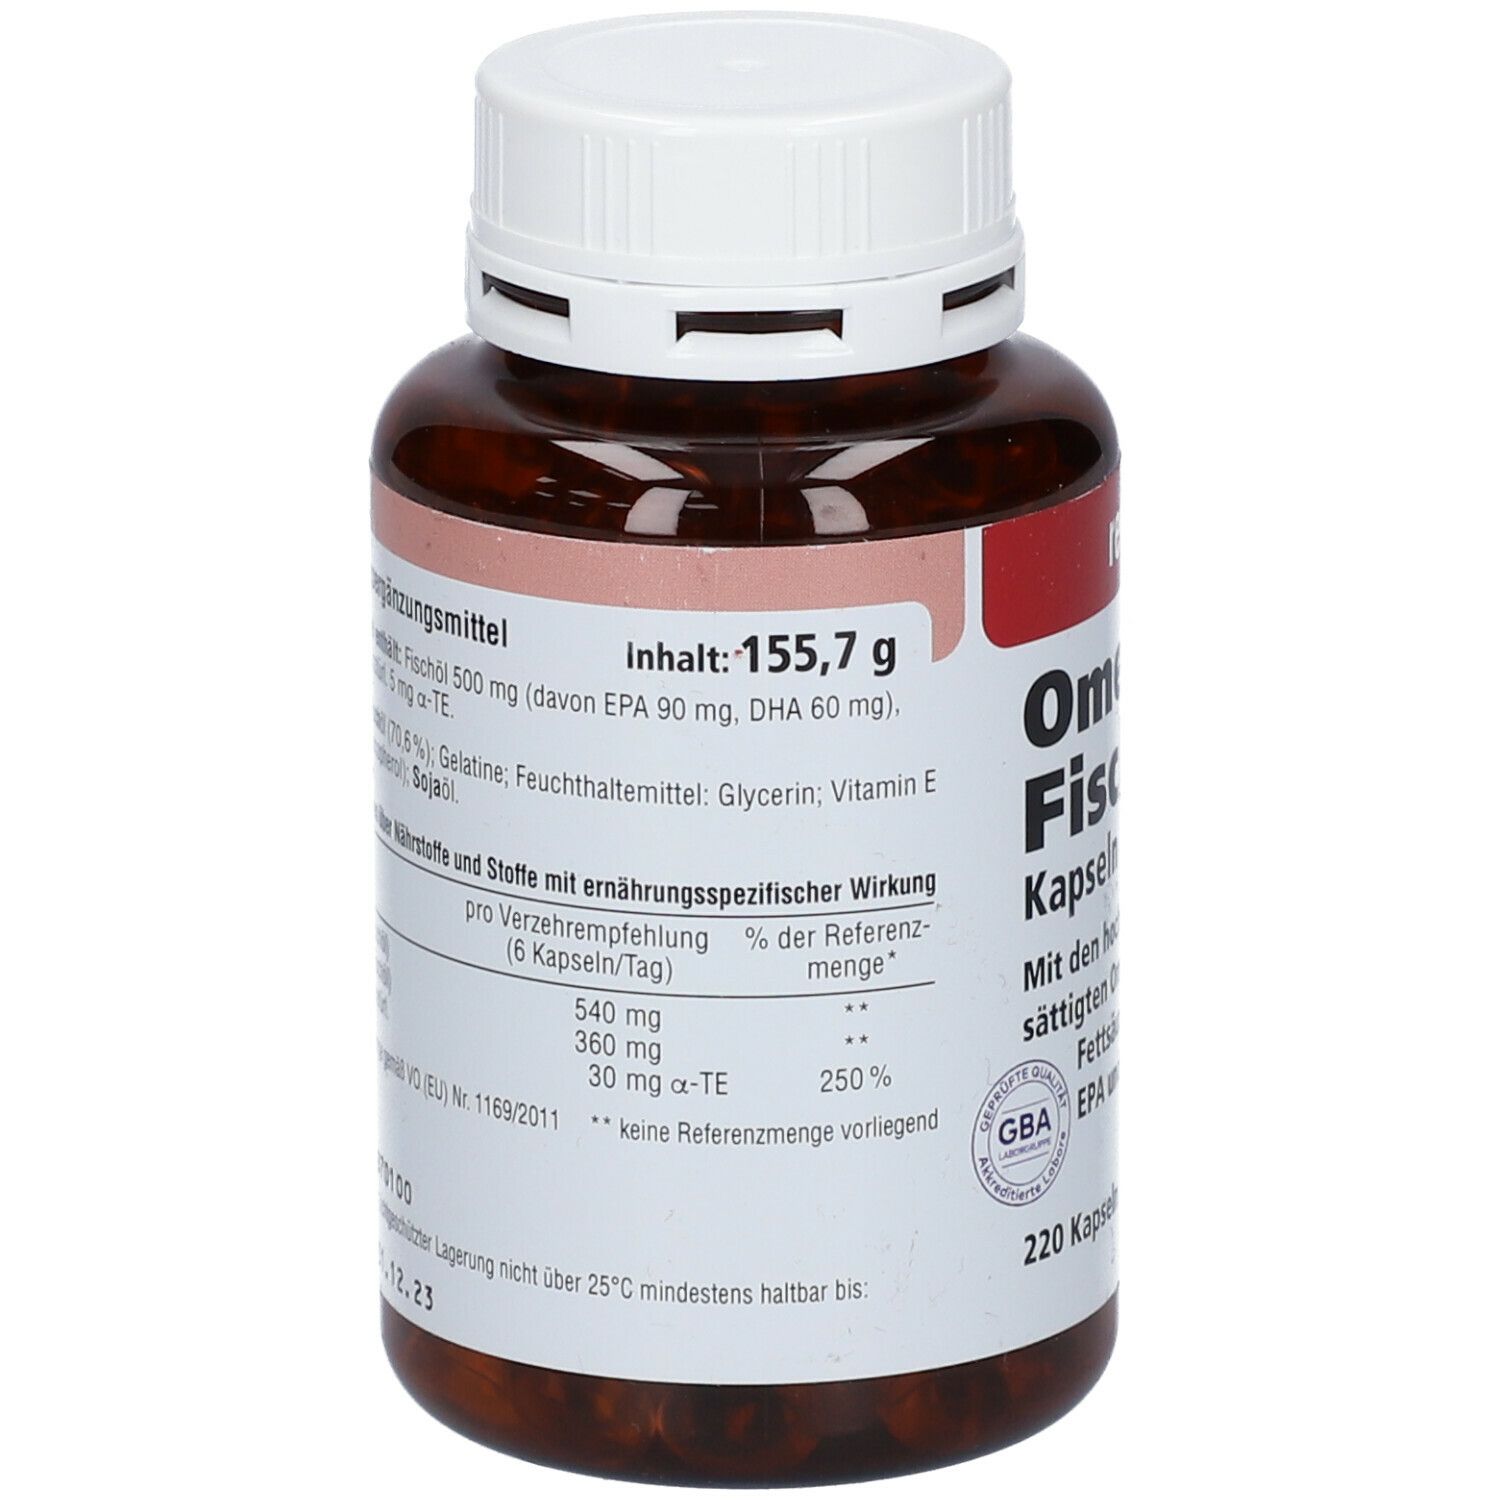 revomed® Omega-3 Fischöl Kapseln